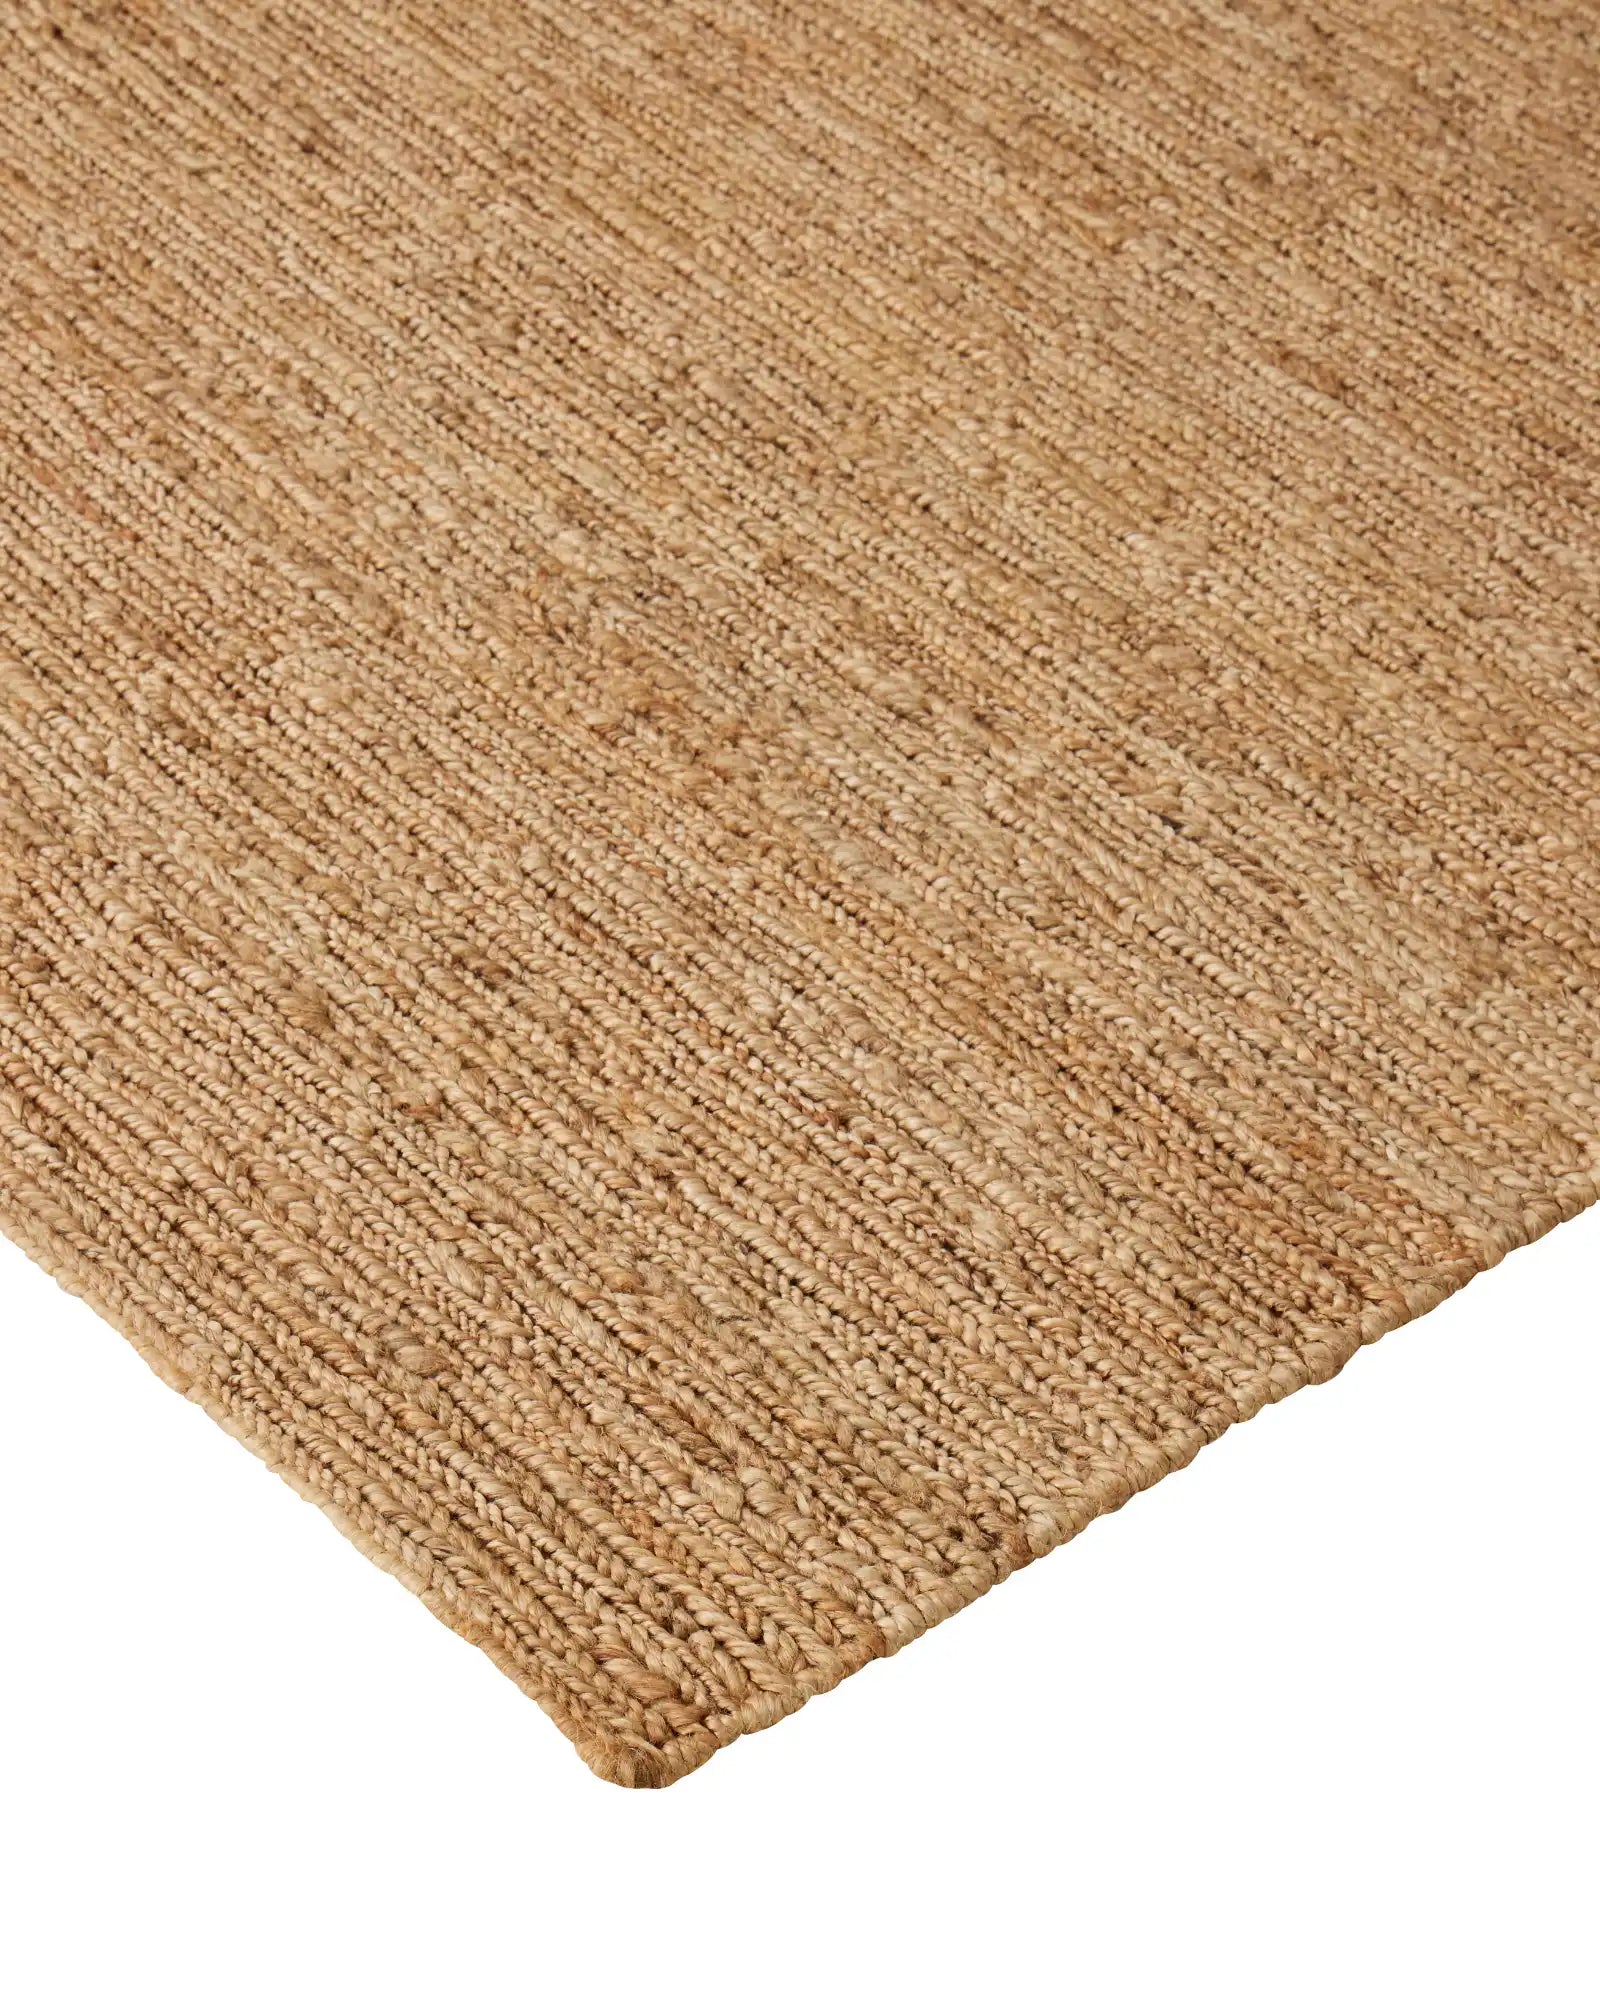 Weave Suffolk Floor Rug - Natural RSK03NATU